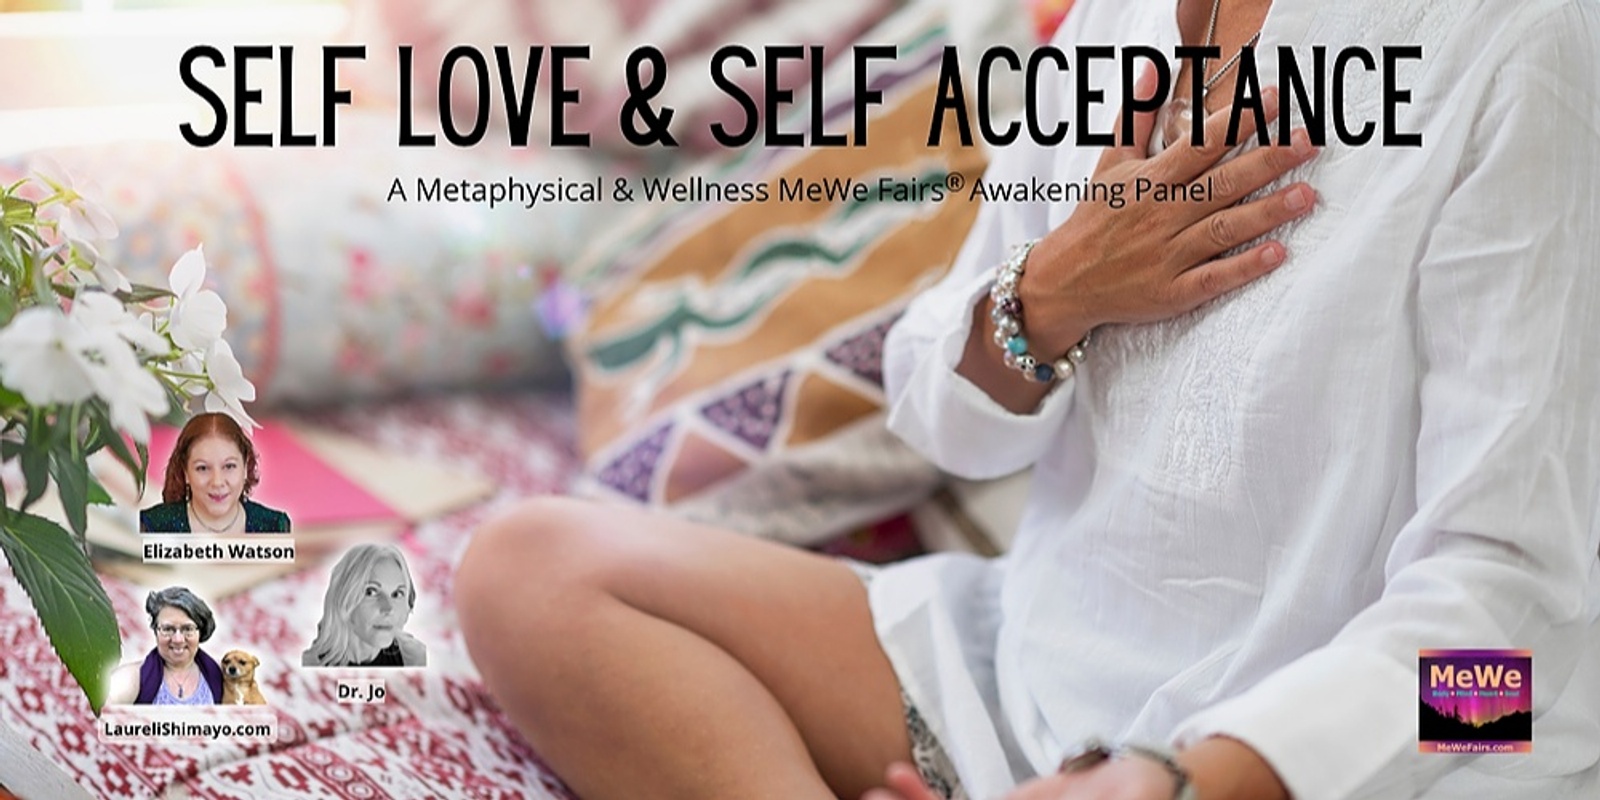 Self Love & Self Acceptance, a Free Online MeWe Awakening Panel